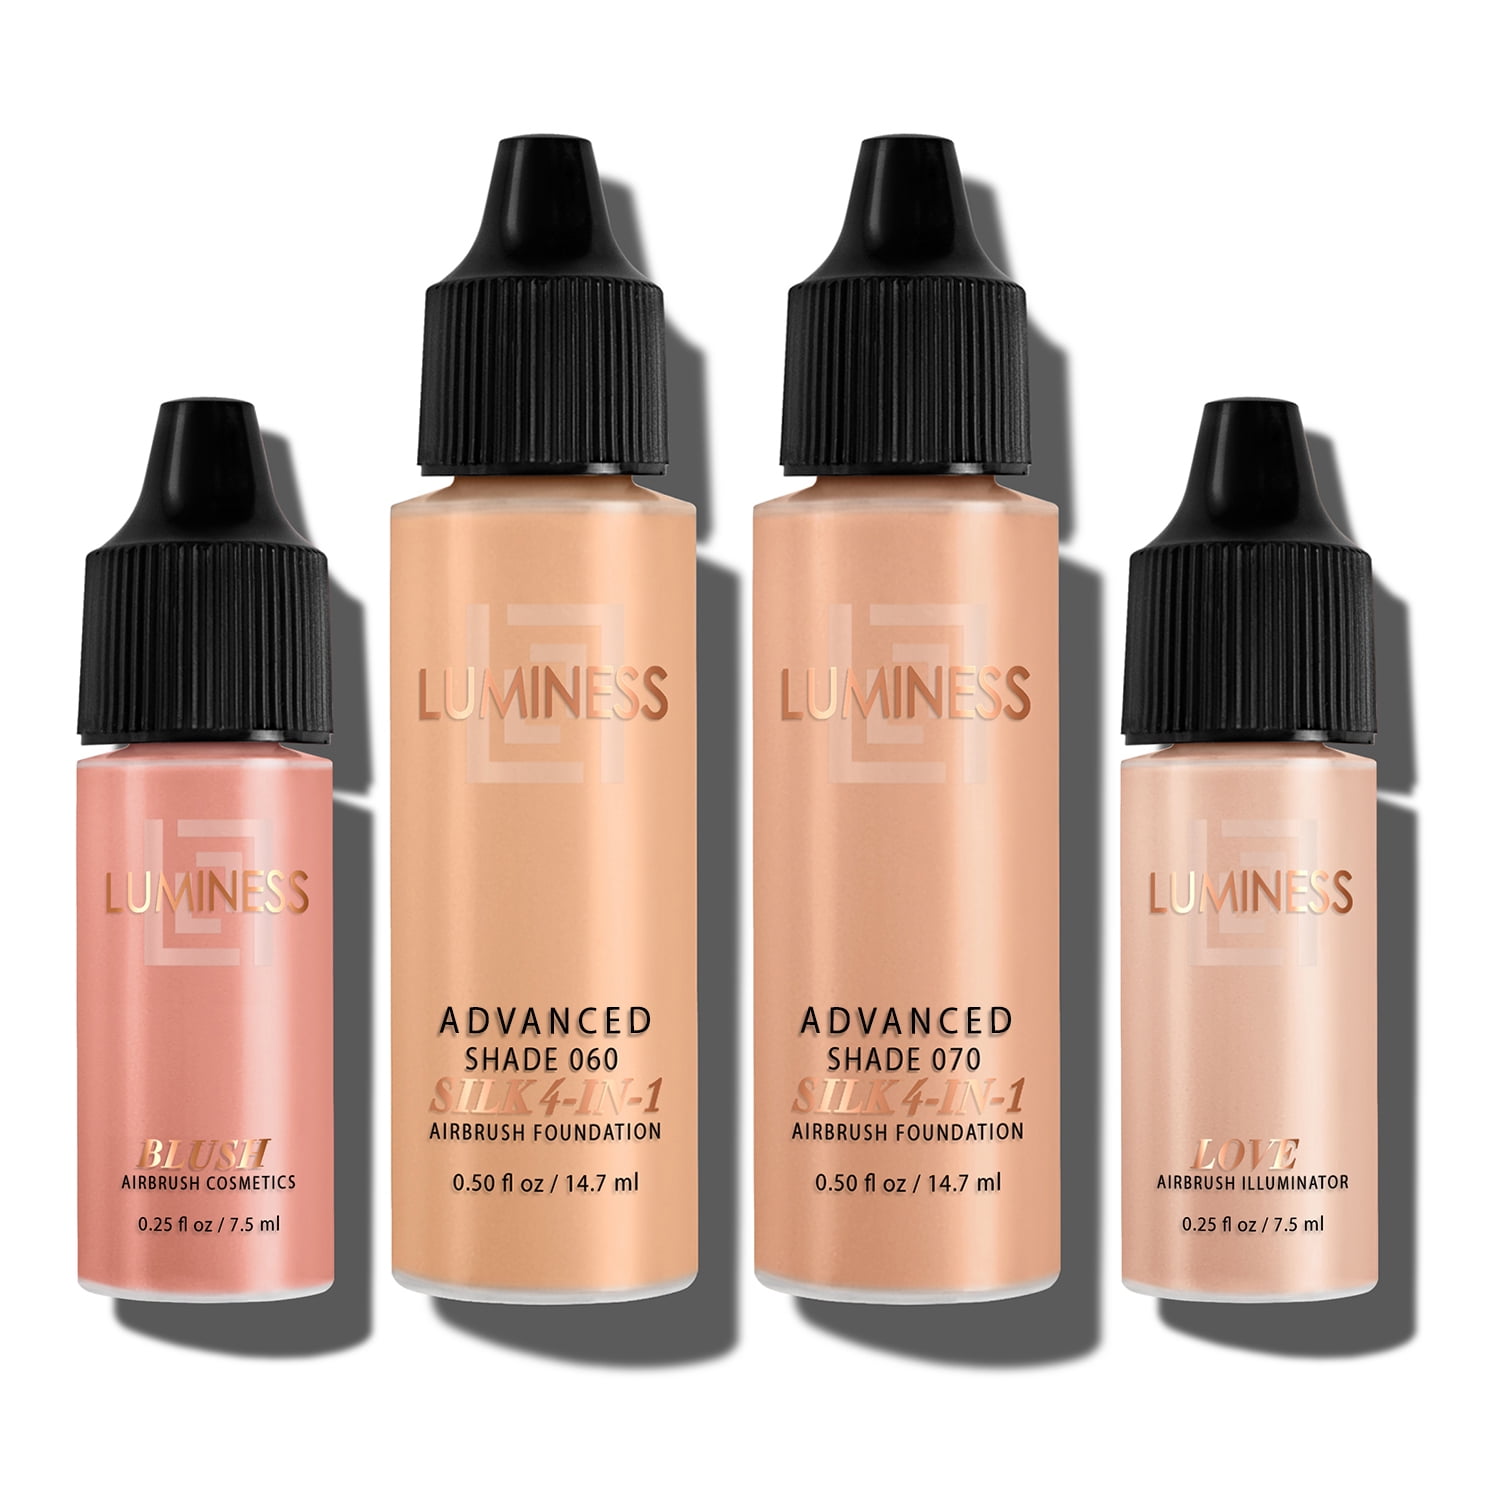 Luminess airbrush makeup kit (Makeup Sold Separately)-Price May Be